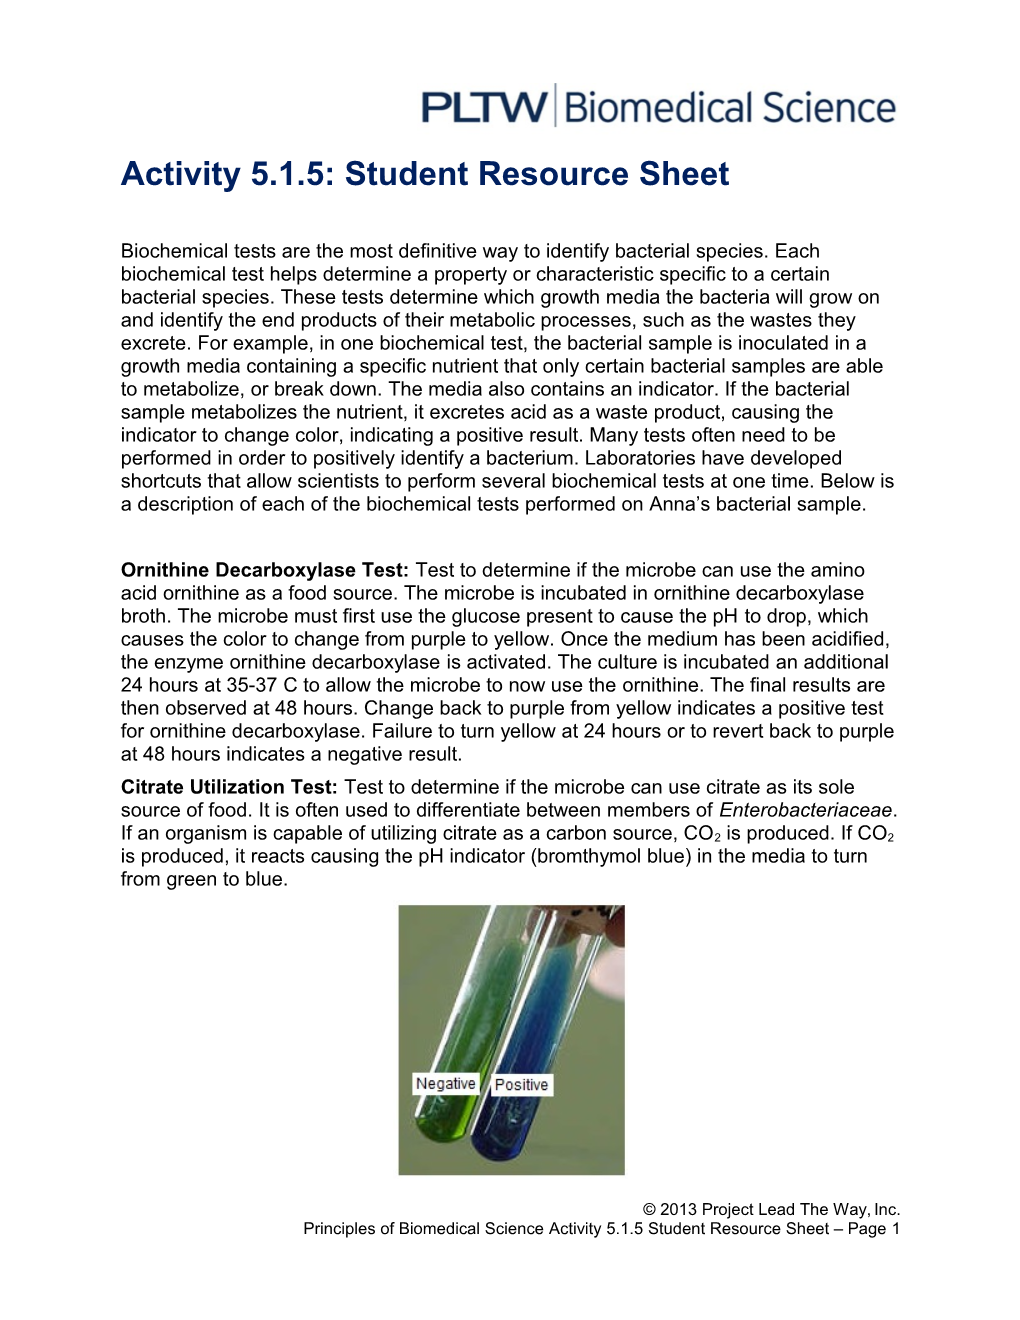 Activity 5.1.5: Student Resource Sheet